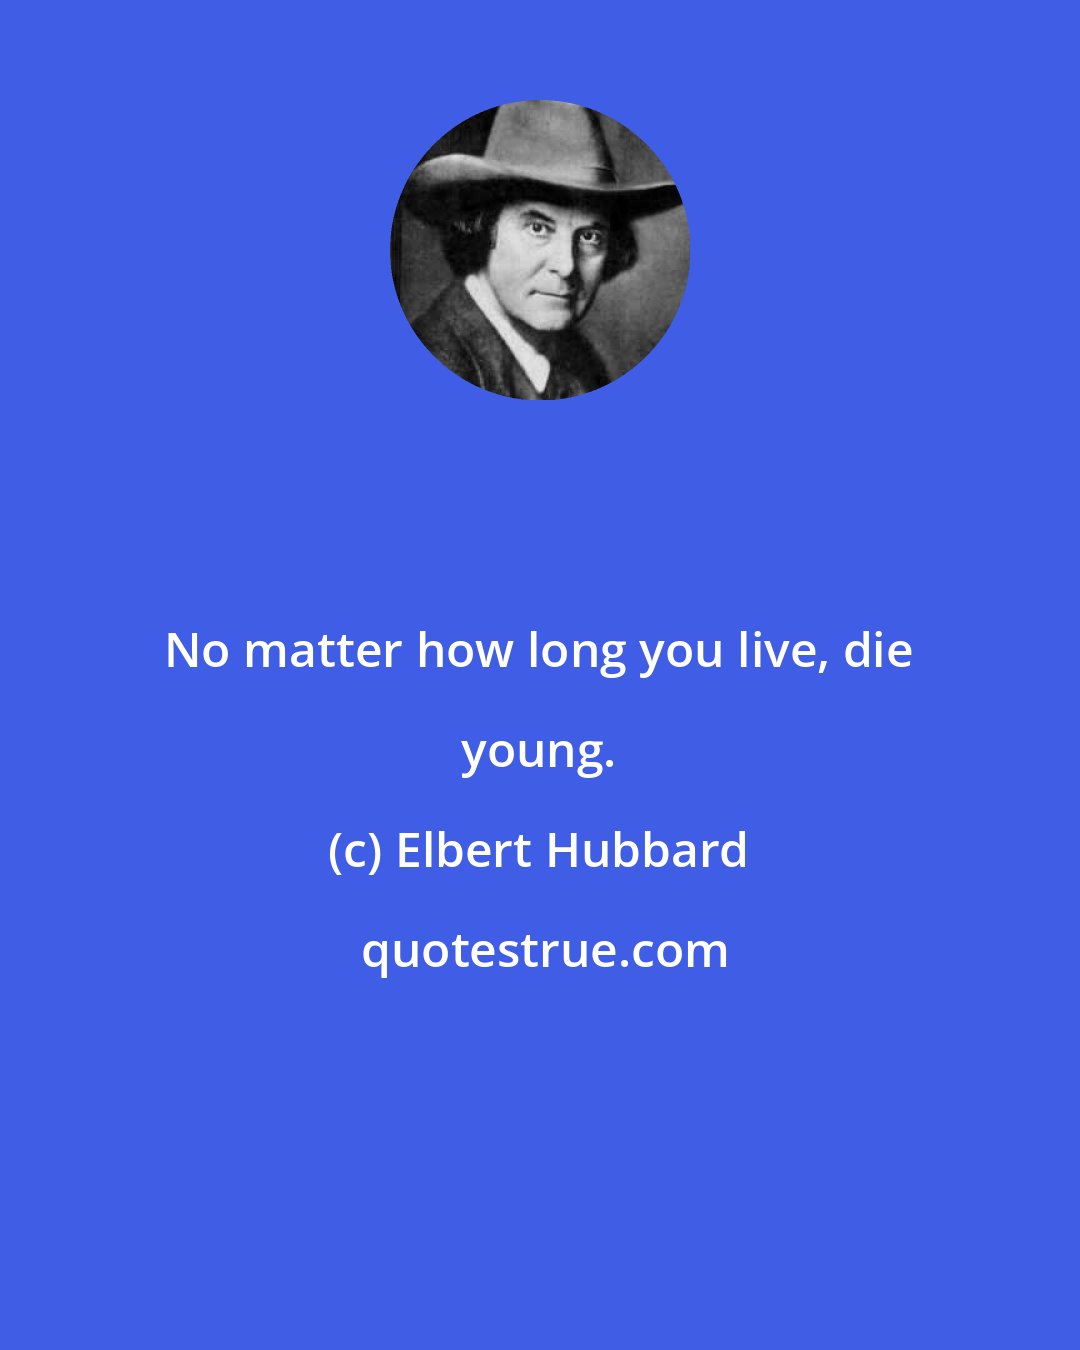 Elbert Hubbard: No matter how long you live, die young.